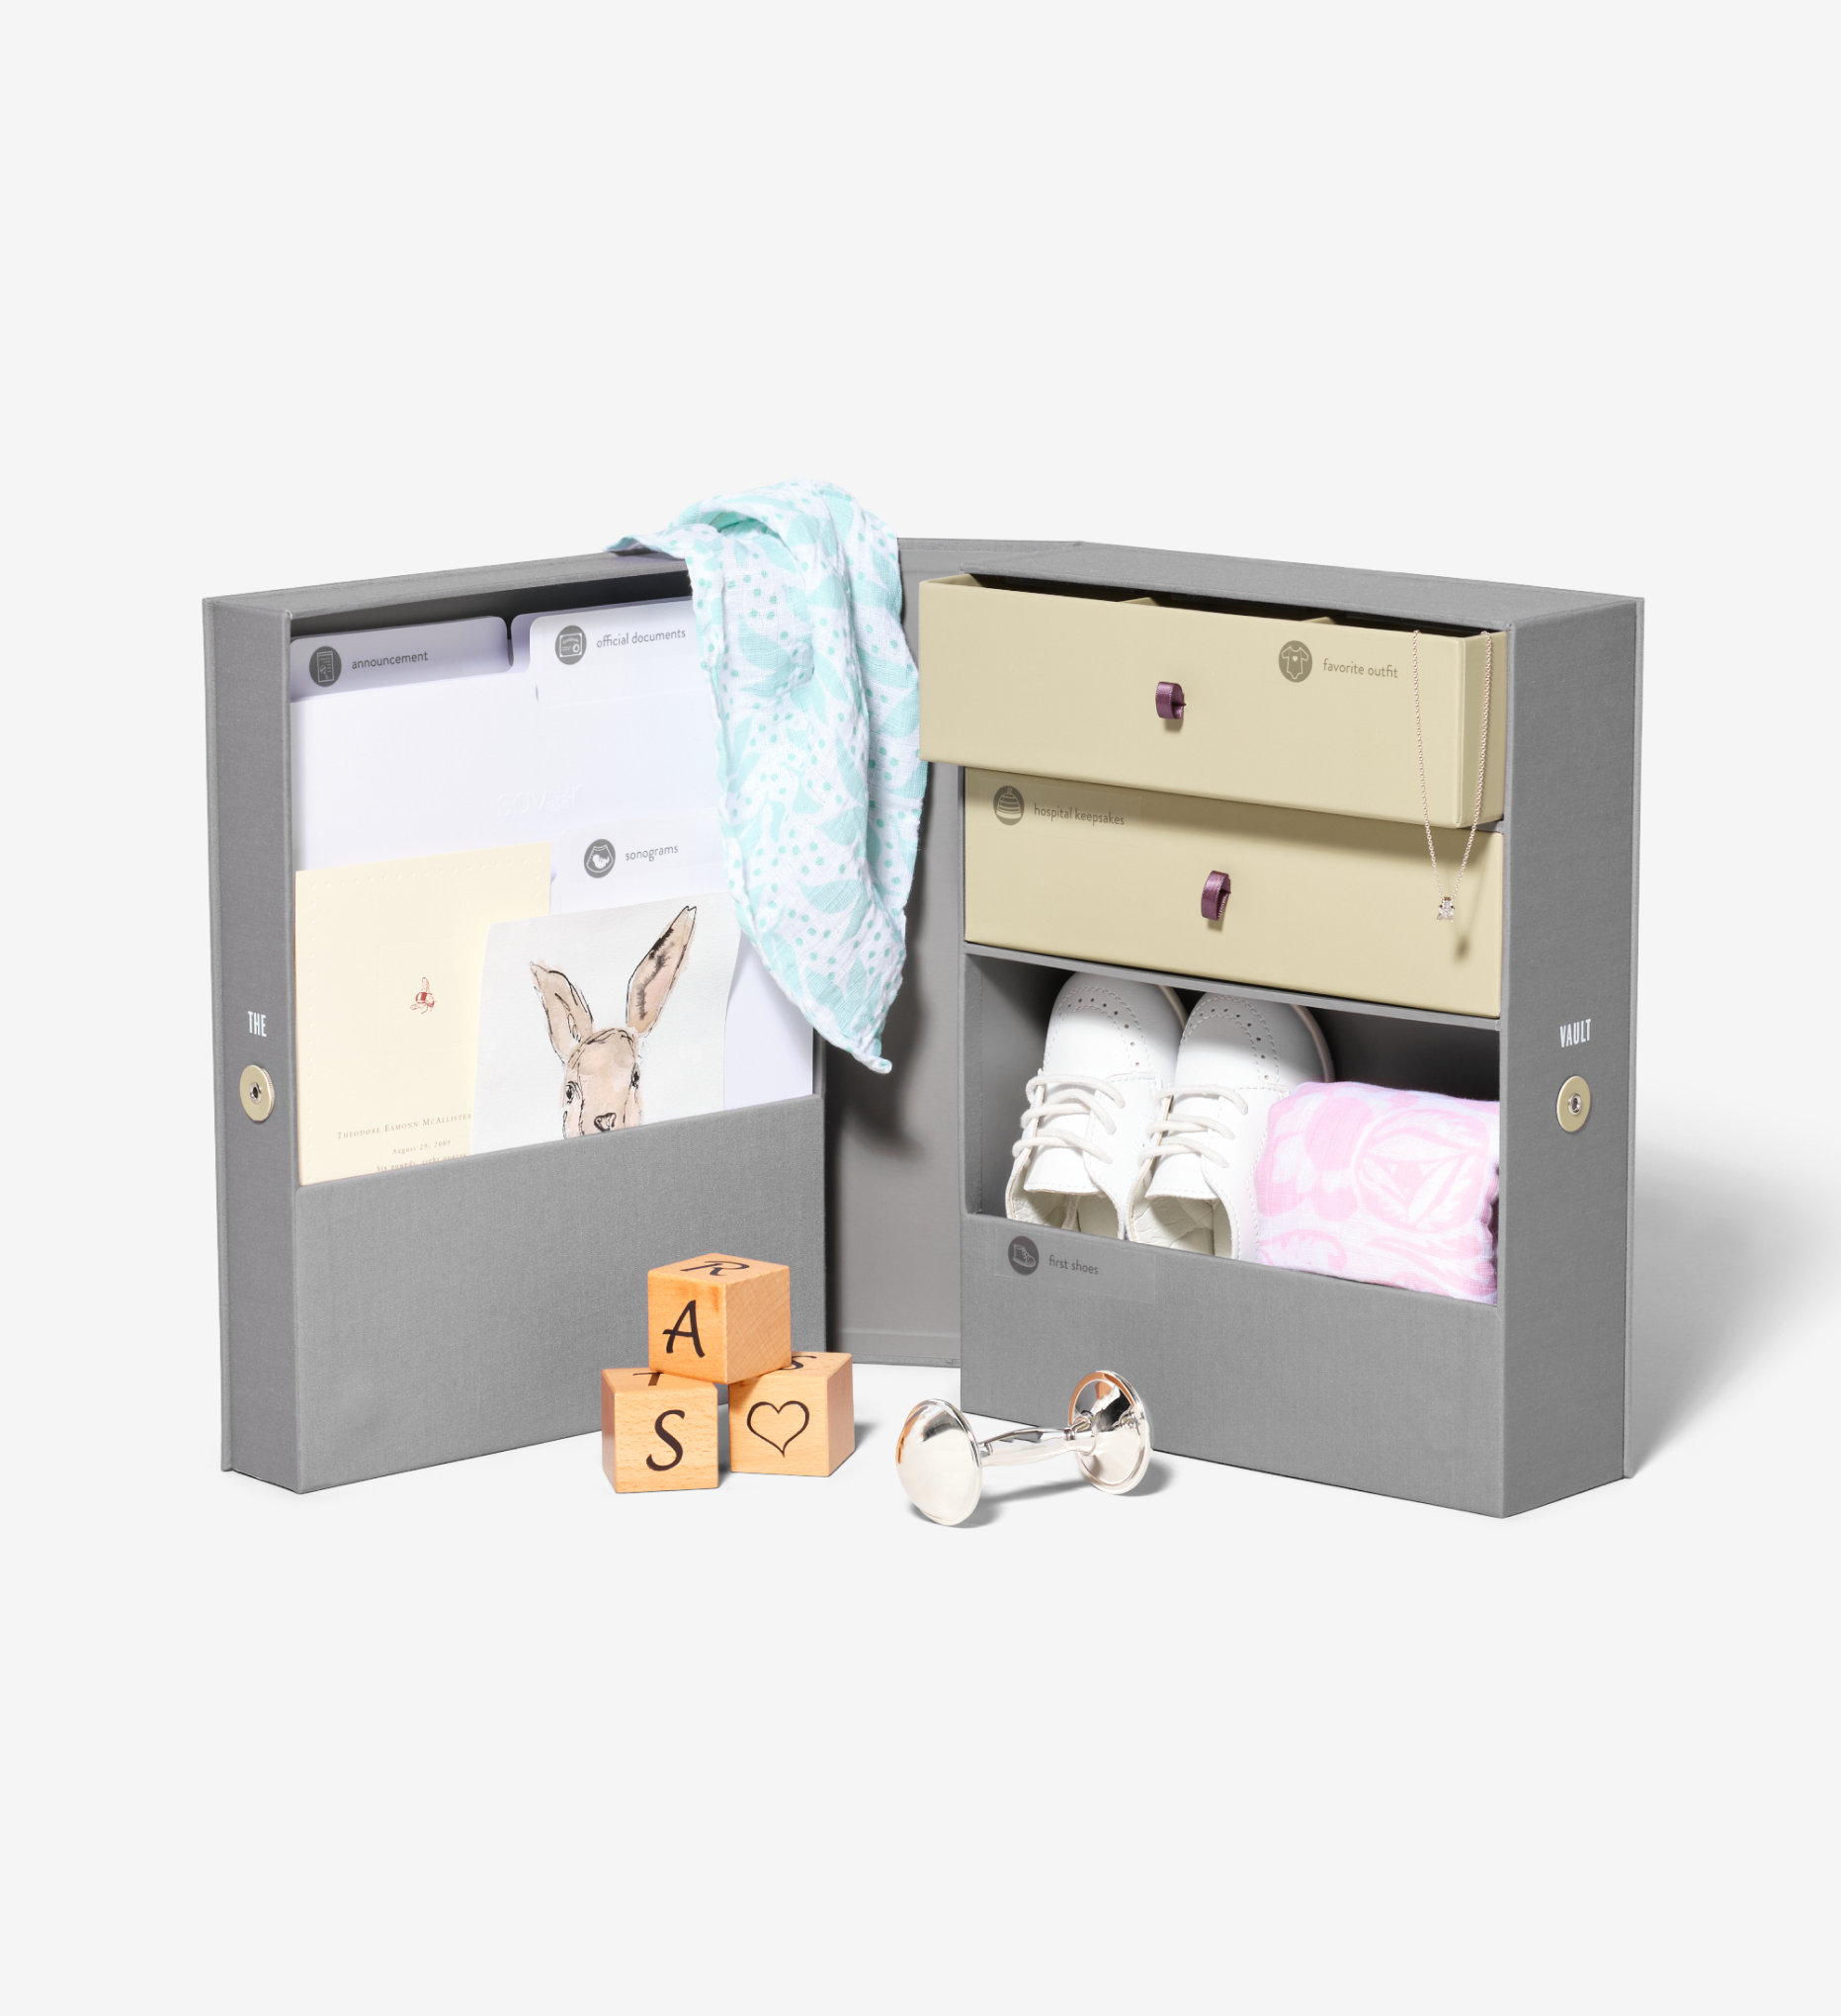 Open slate baby vault keepsake box with props.